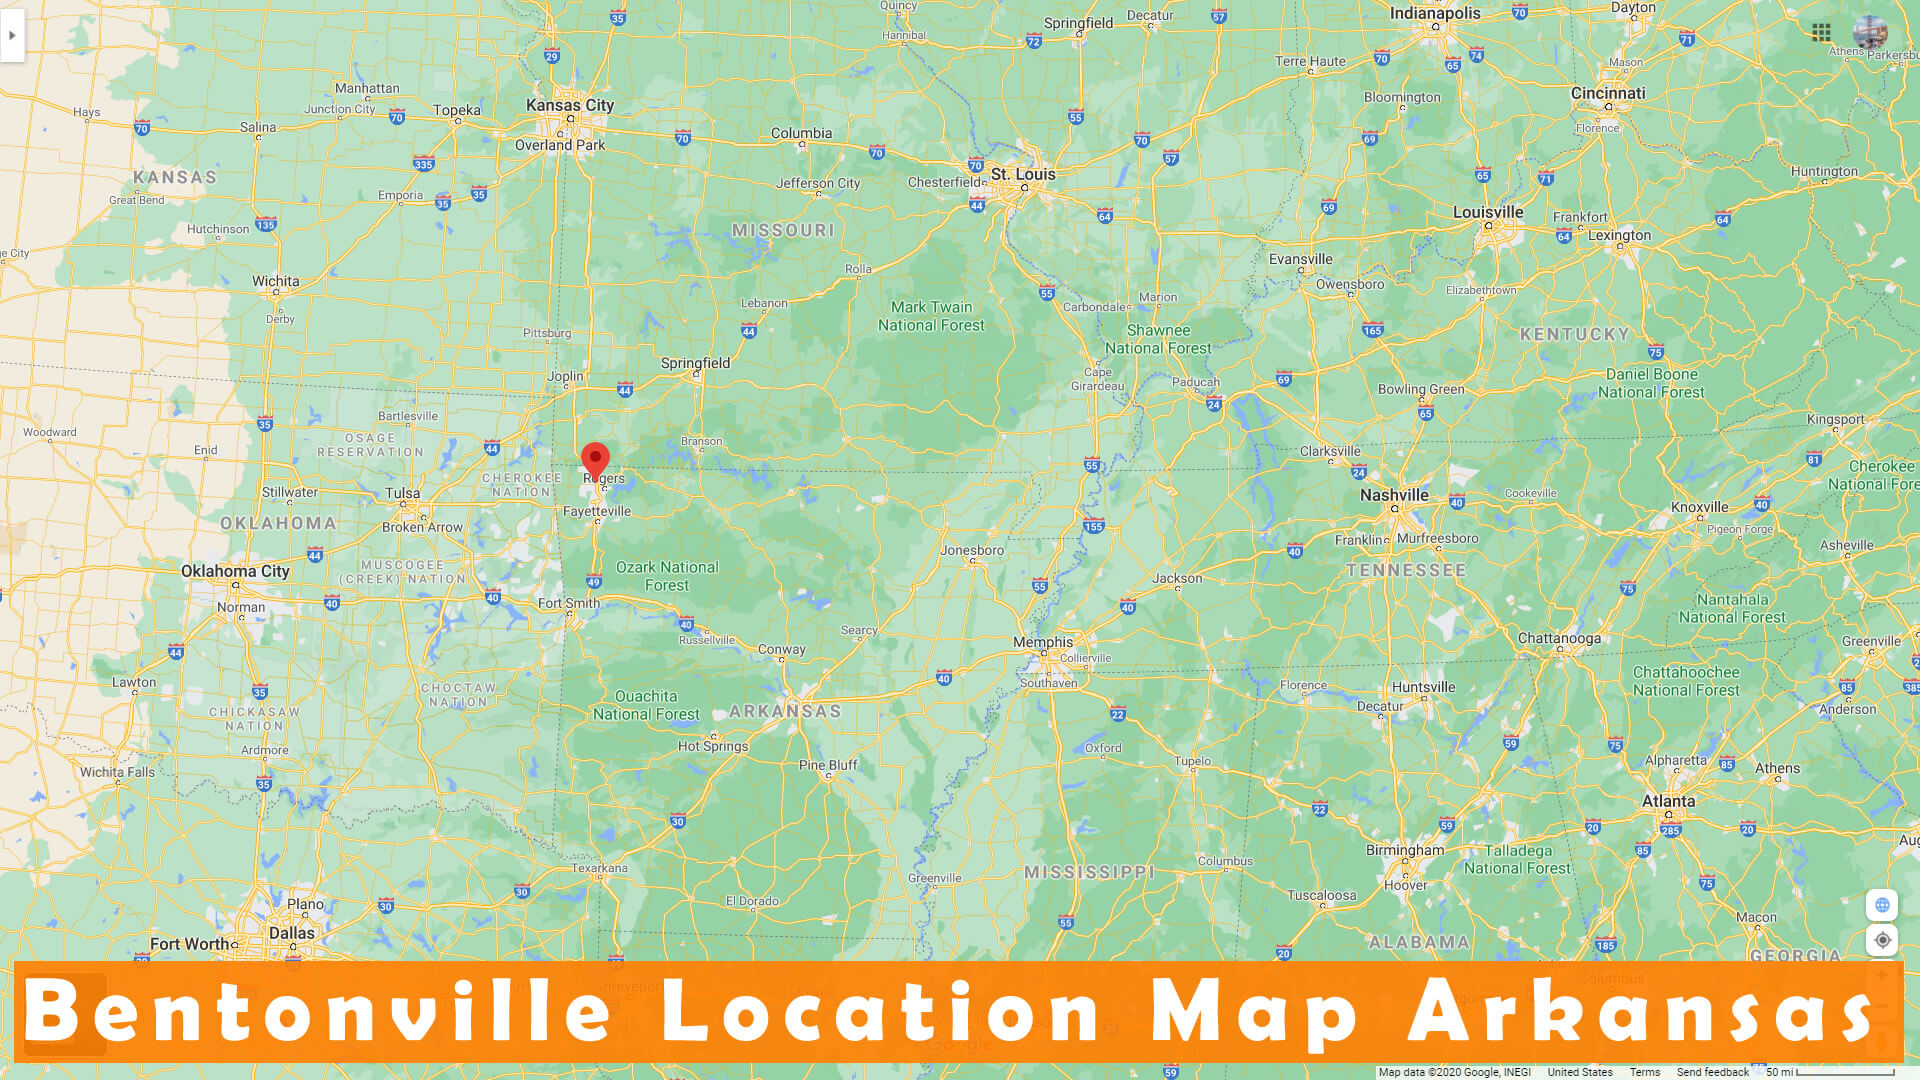 Bentonville Location Map Arkansas